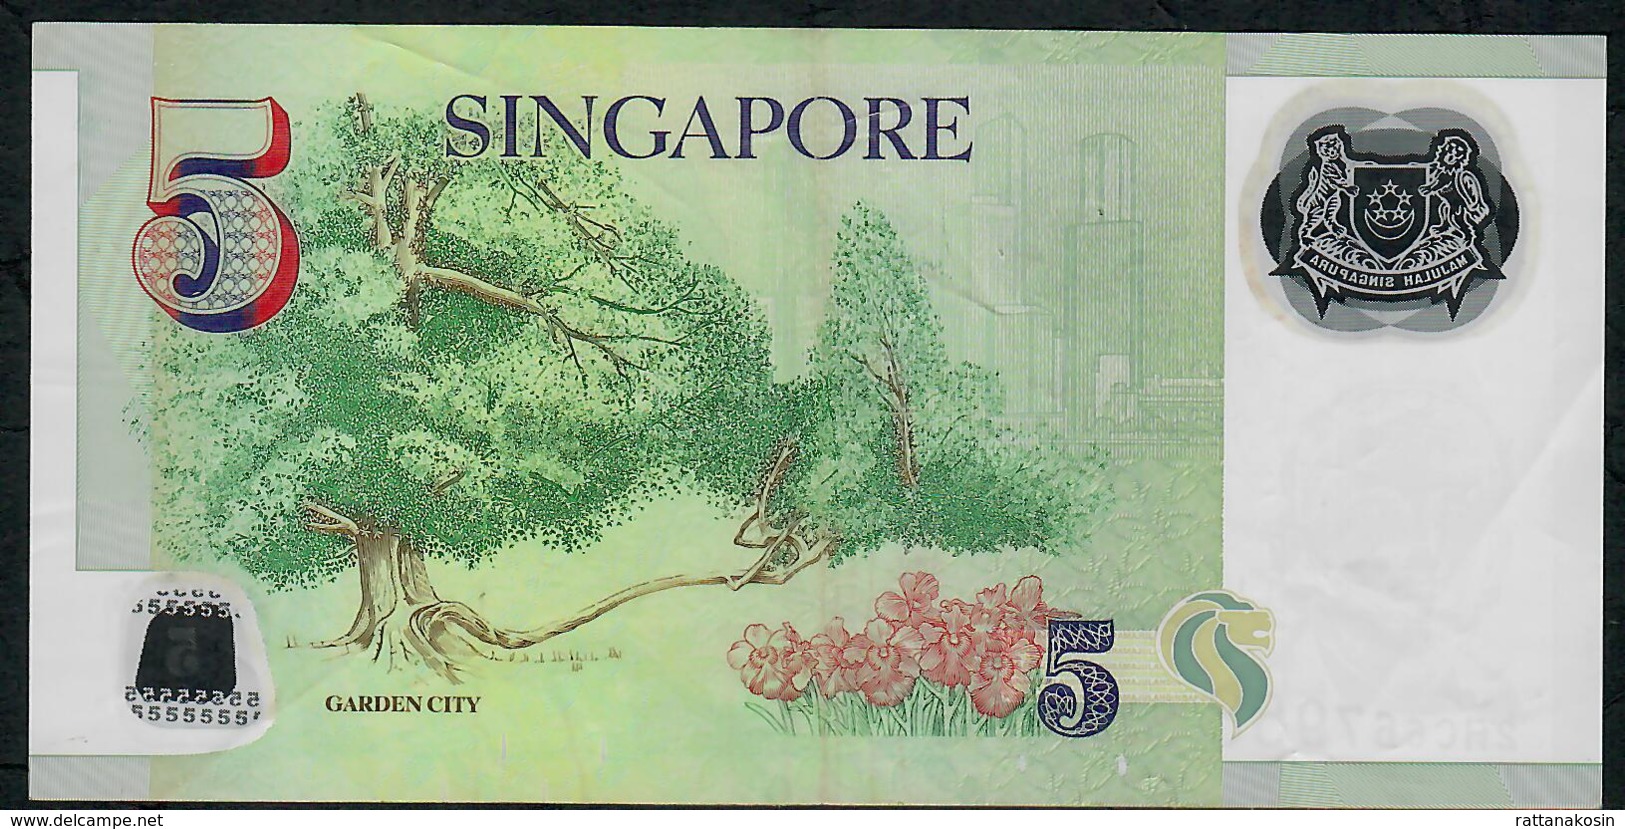 SINGAPORE  P47a 5 DOLLARS  2007 #2HC  N0 Symbol VF NO P.h; - Singapore